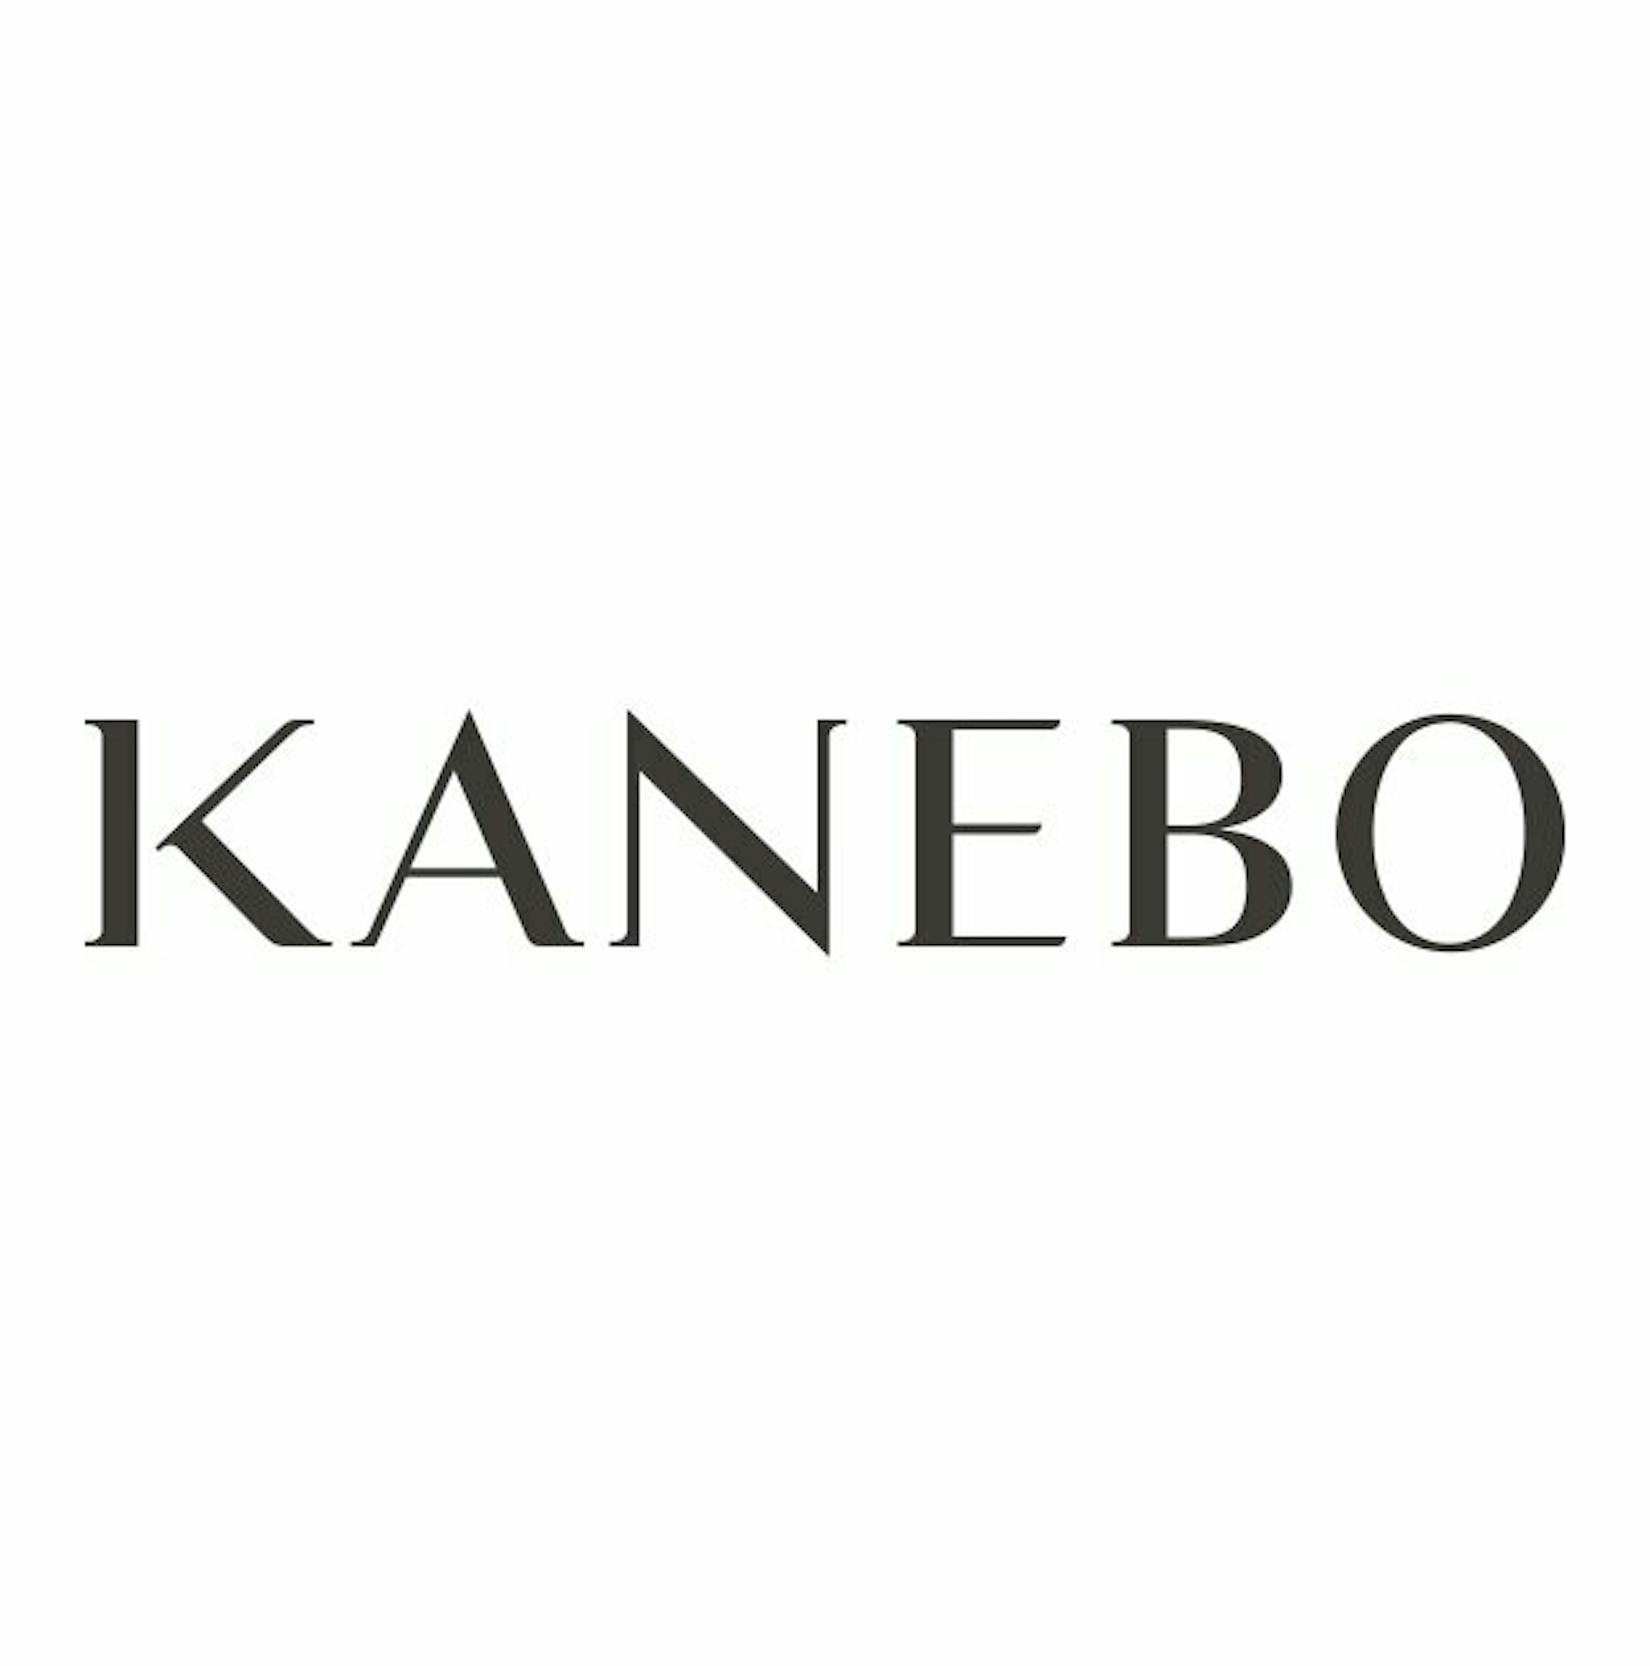 Kanebo | Beauty